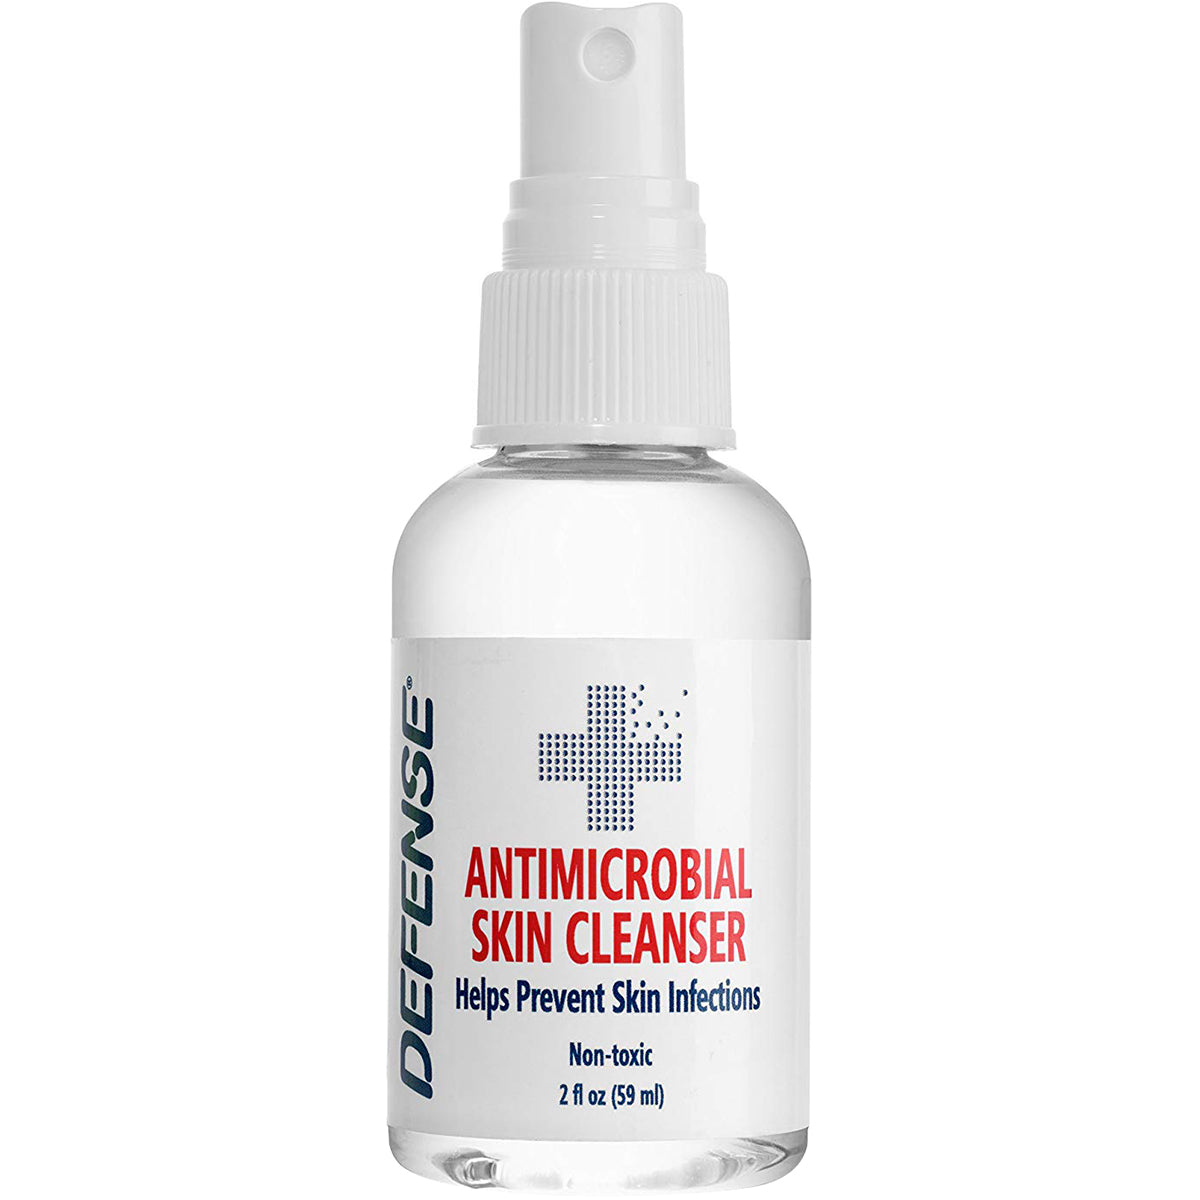 Defense Soap Hypochlorous Skin Cleanser Spray Defense Soap